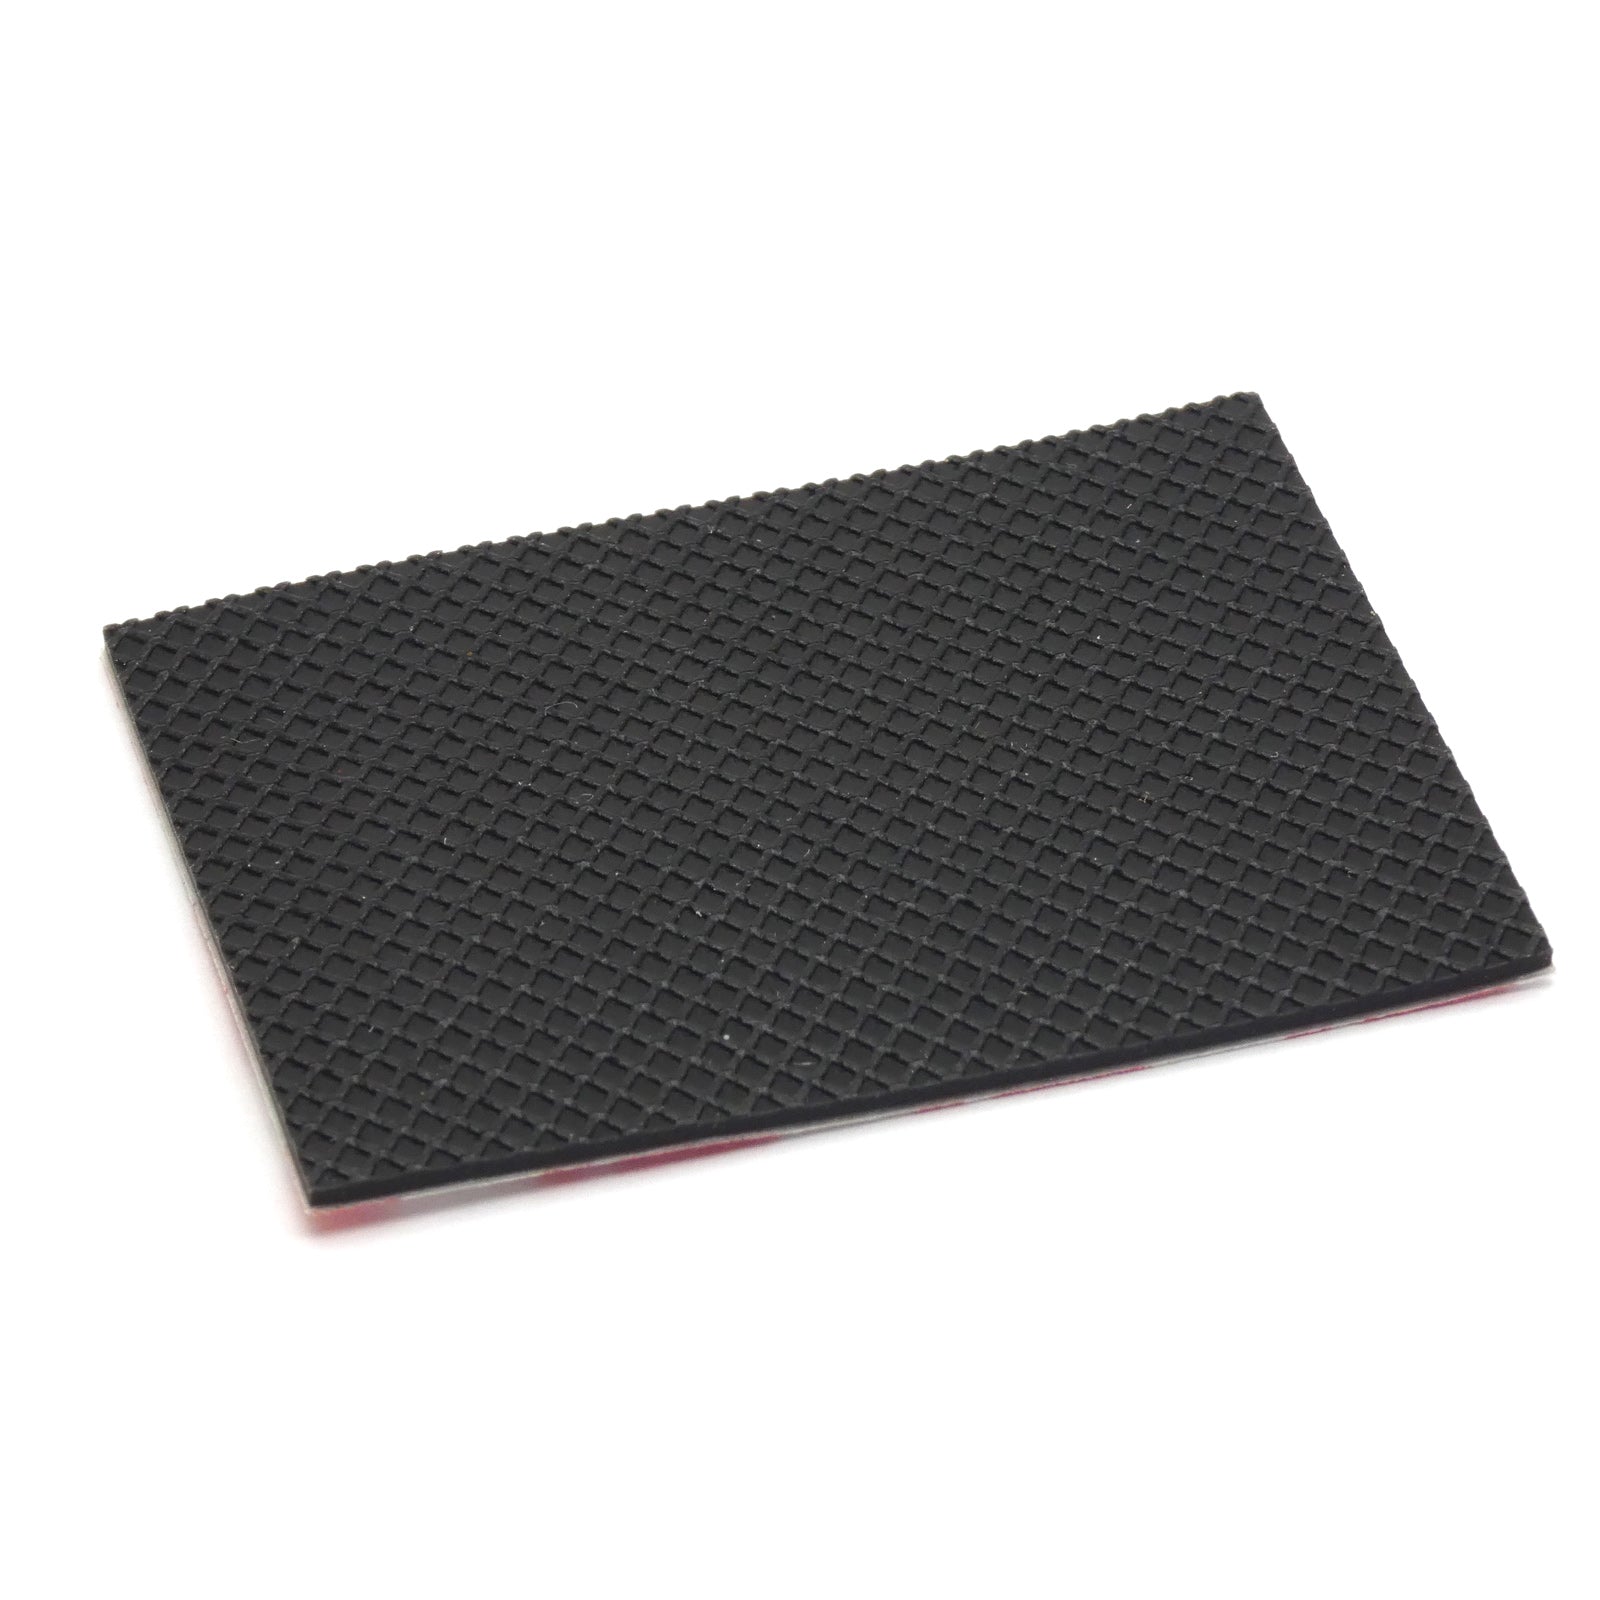 10PCS Thick 1.5mm Anti-slip Self Adhesive Silicone Rubber Feet Pad